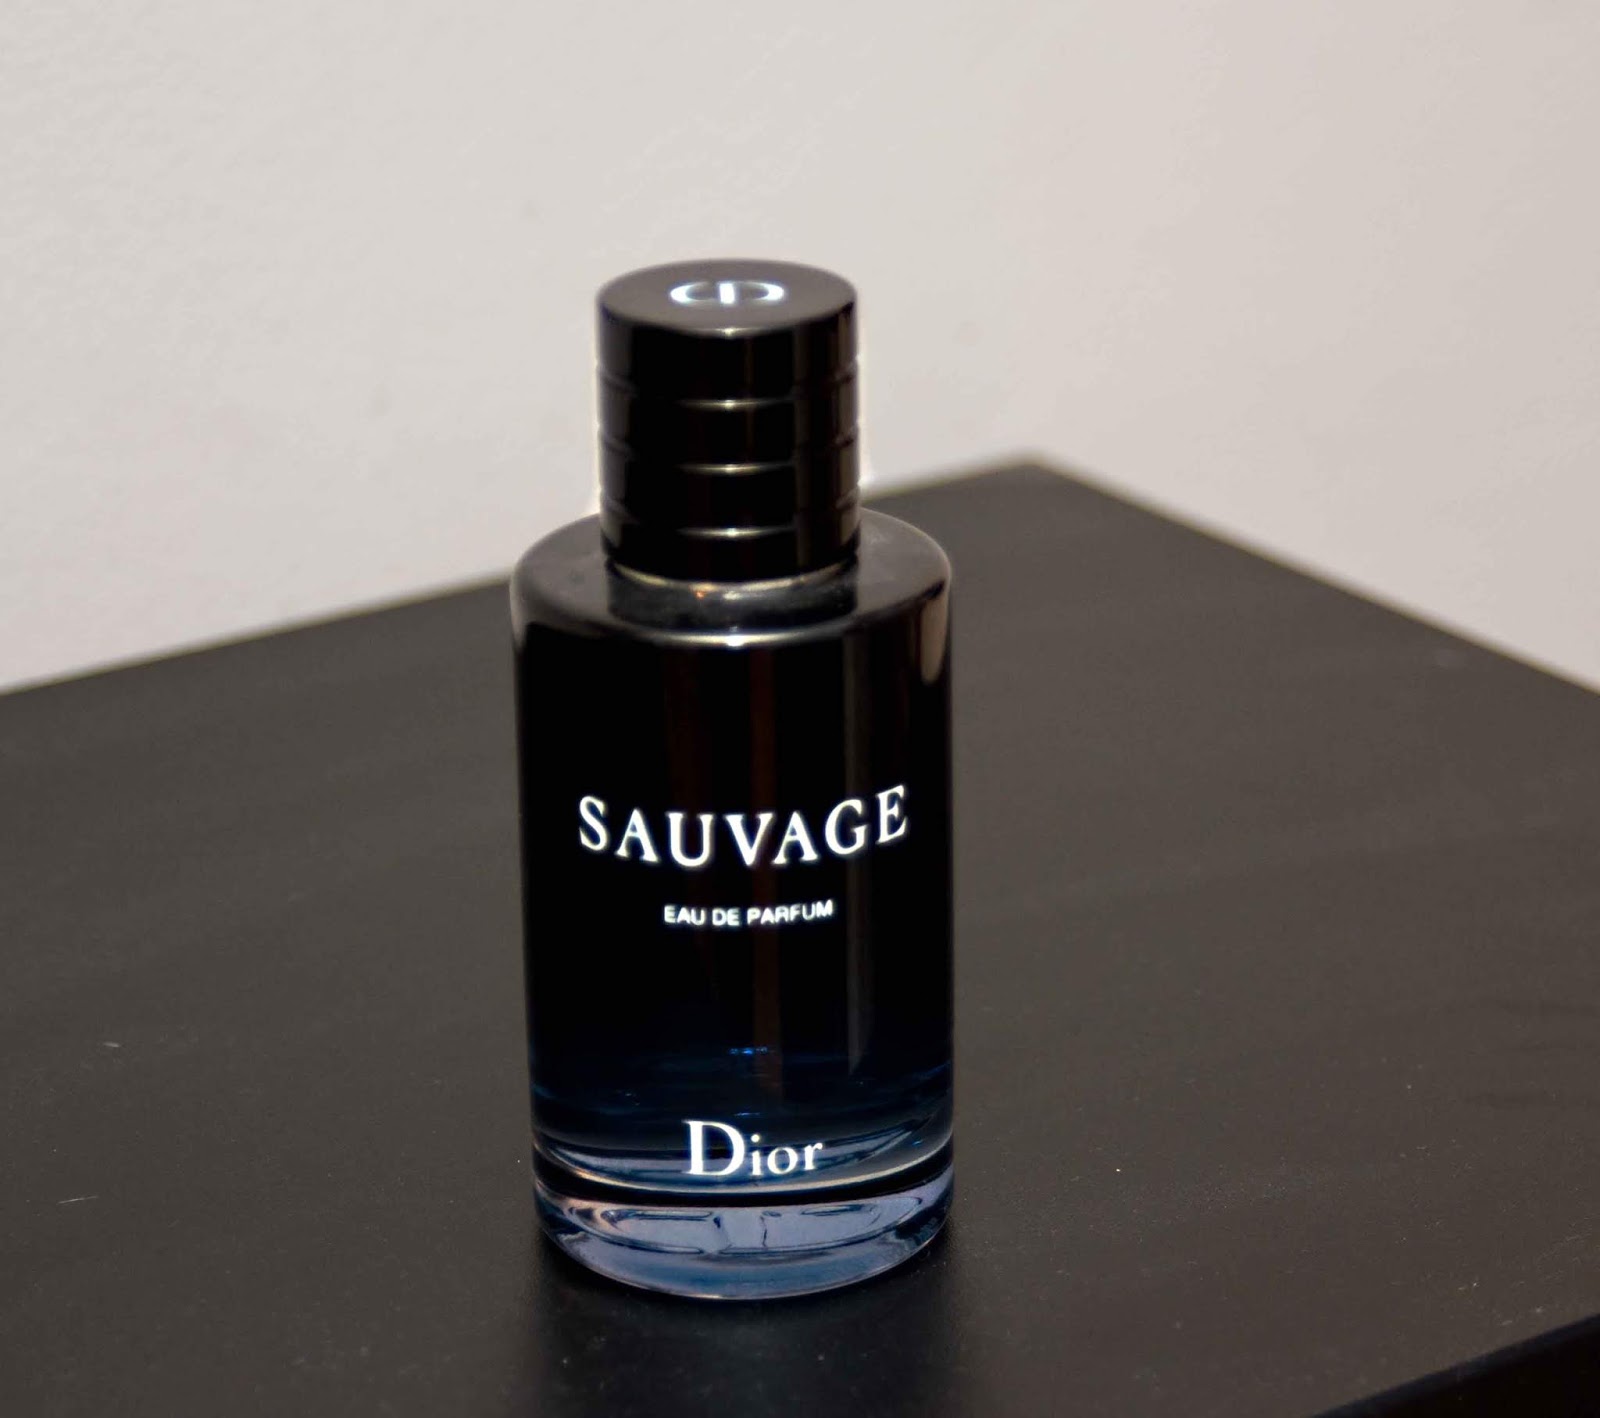 Christian Dior Sauvage Jak Rozpoznac Podrobke I Oryginal Meskich Perfum